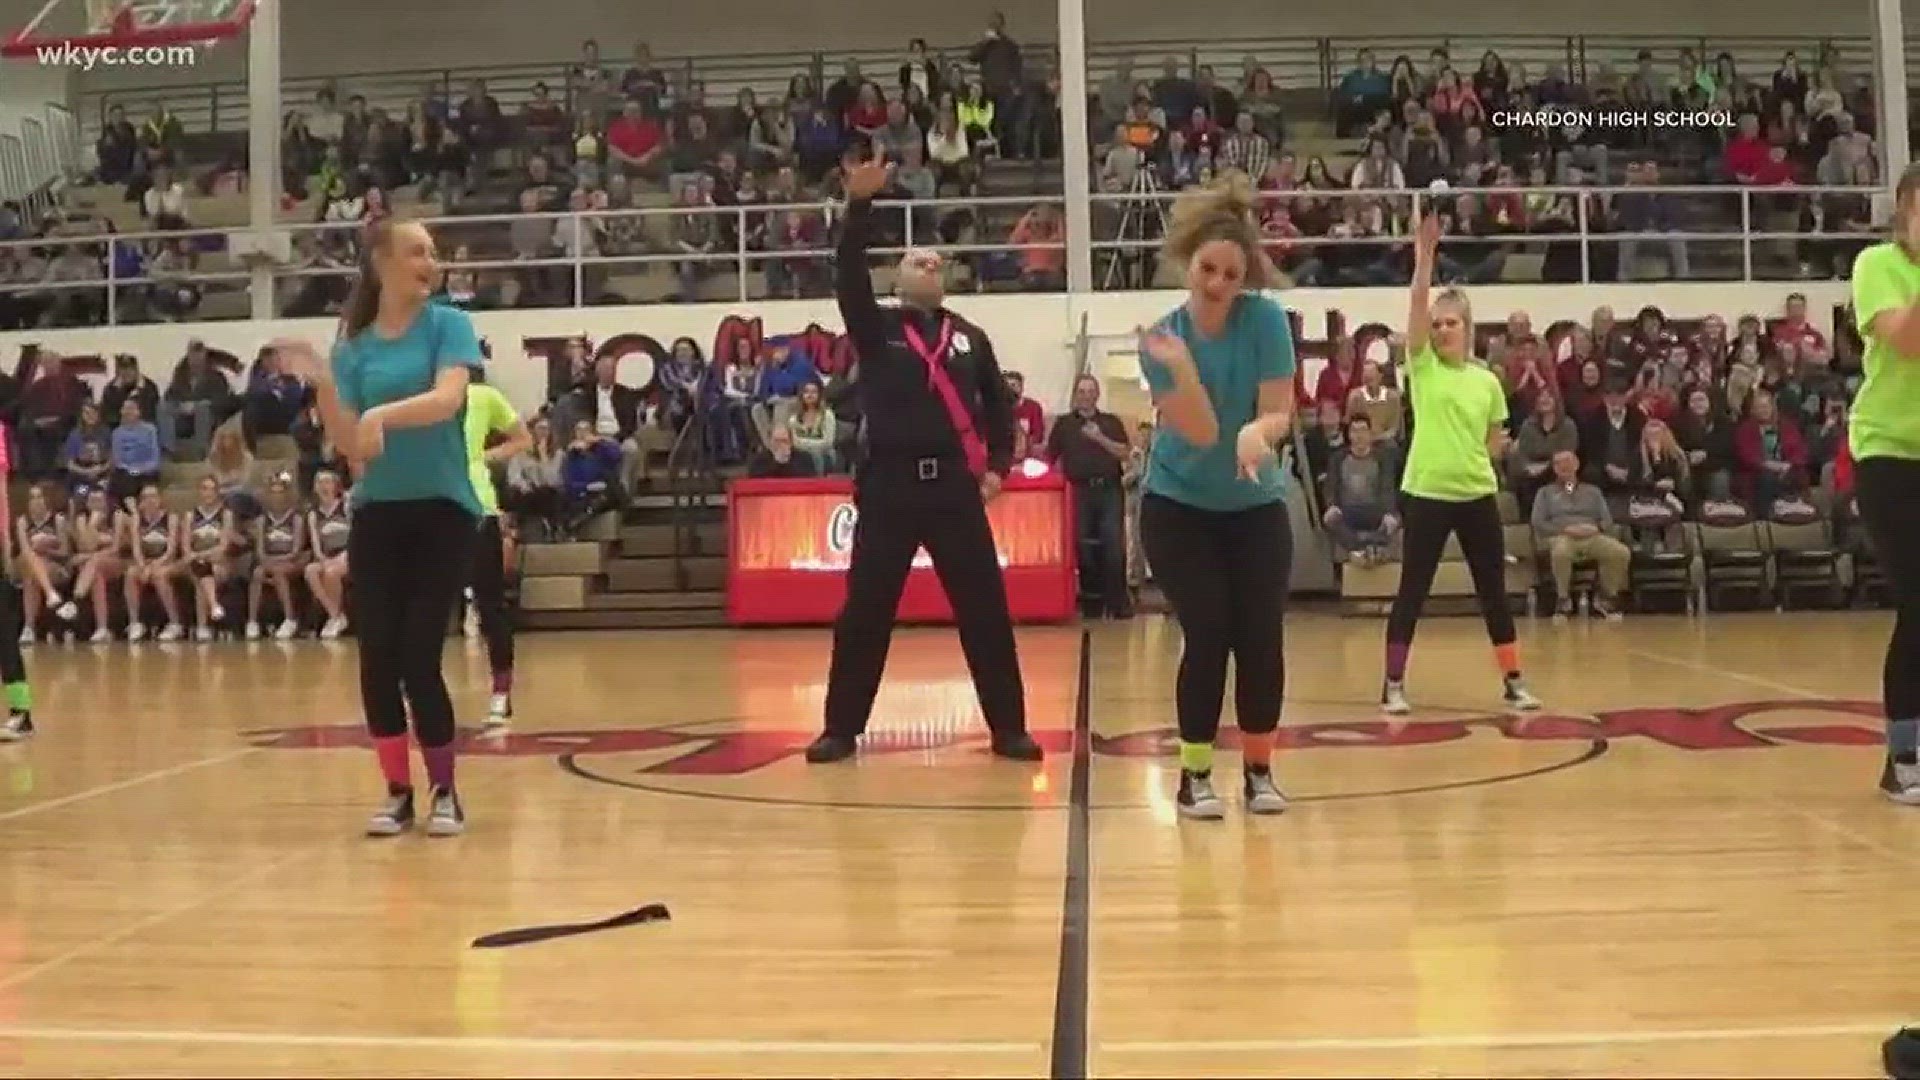 Chardon Police Officer joins high school dance team for performance